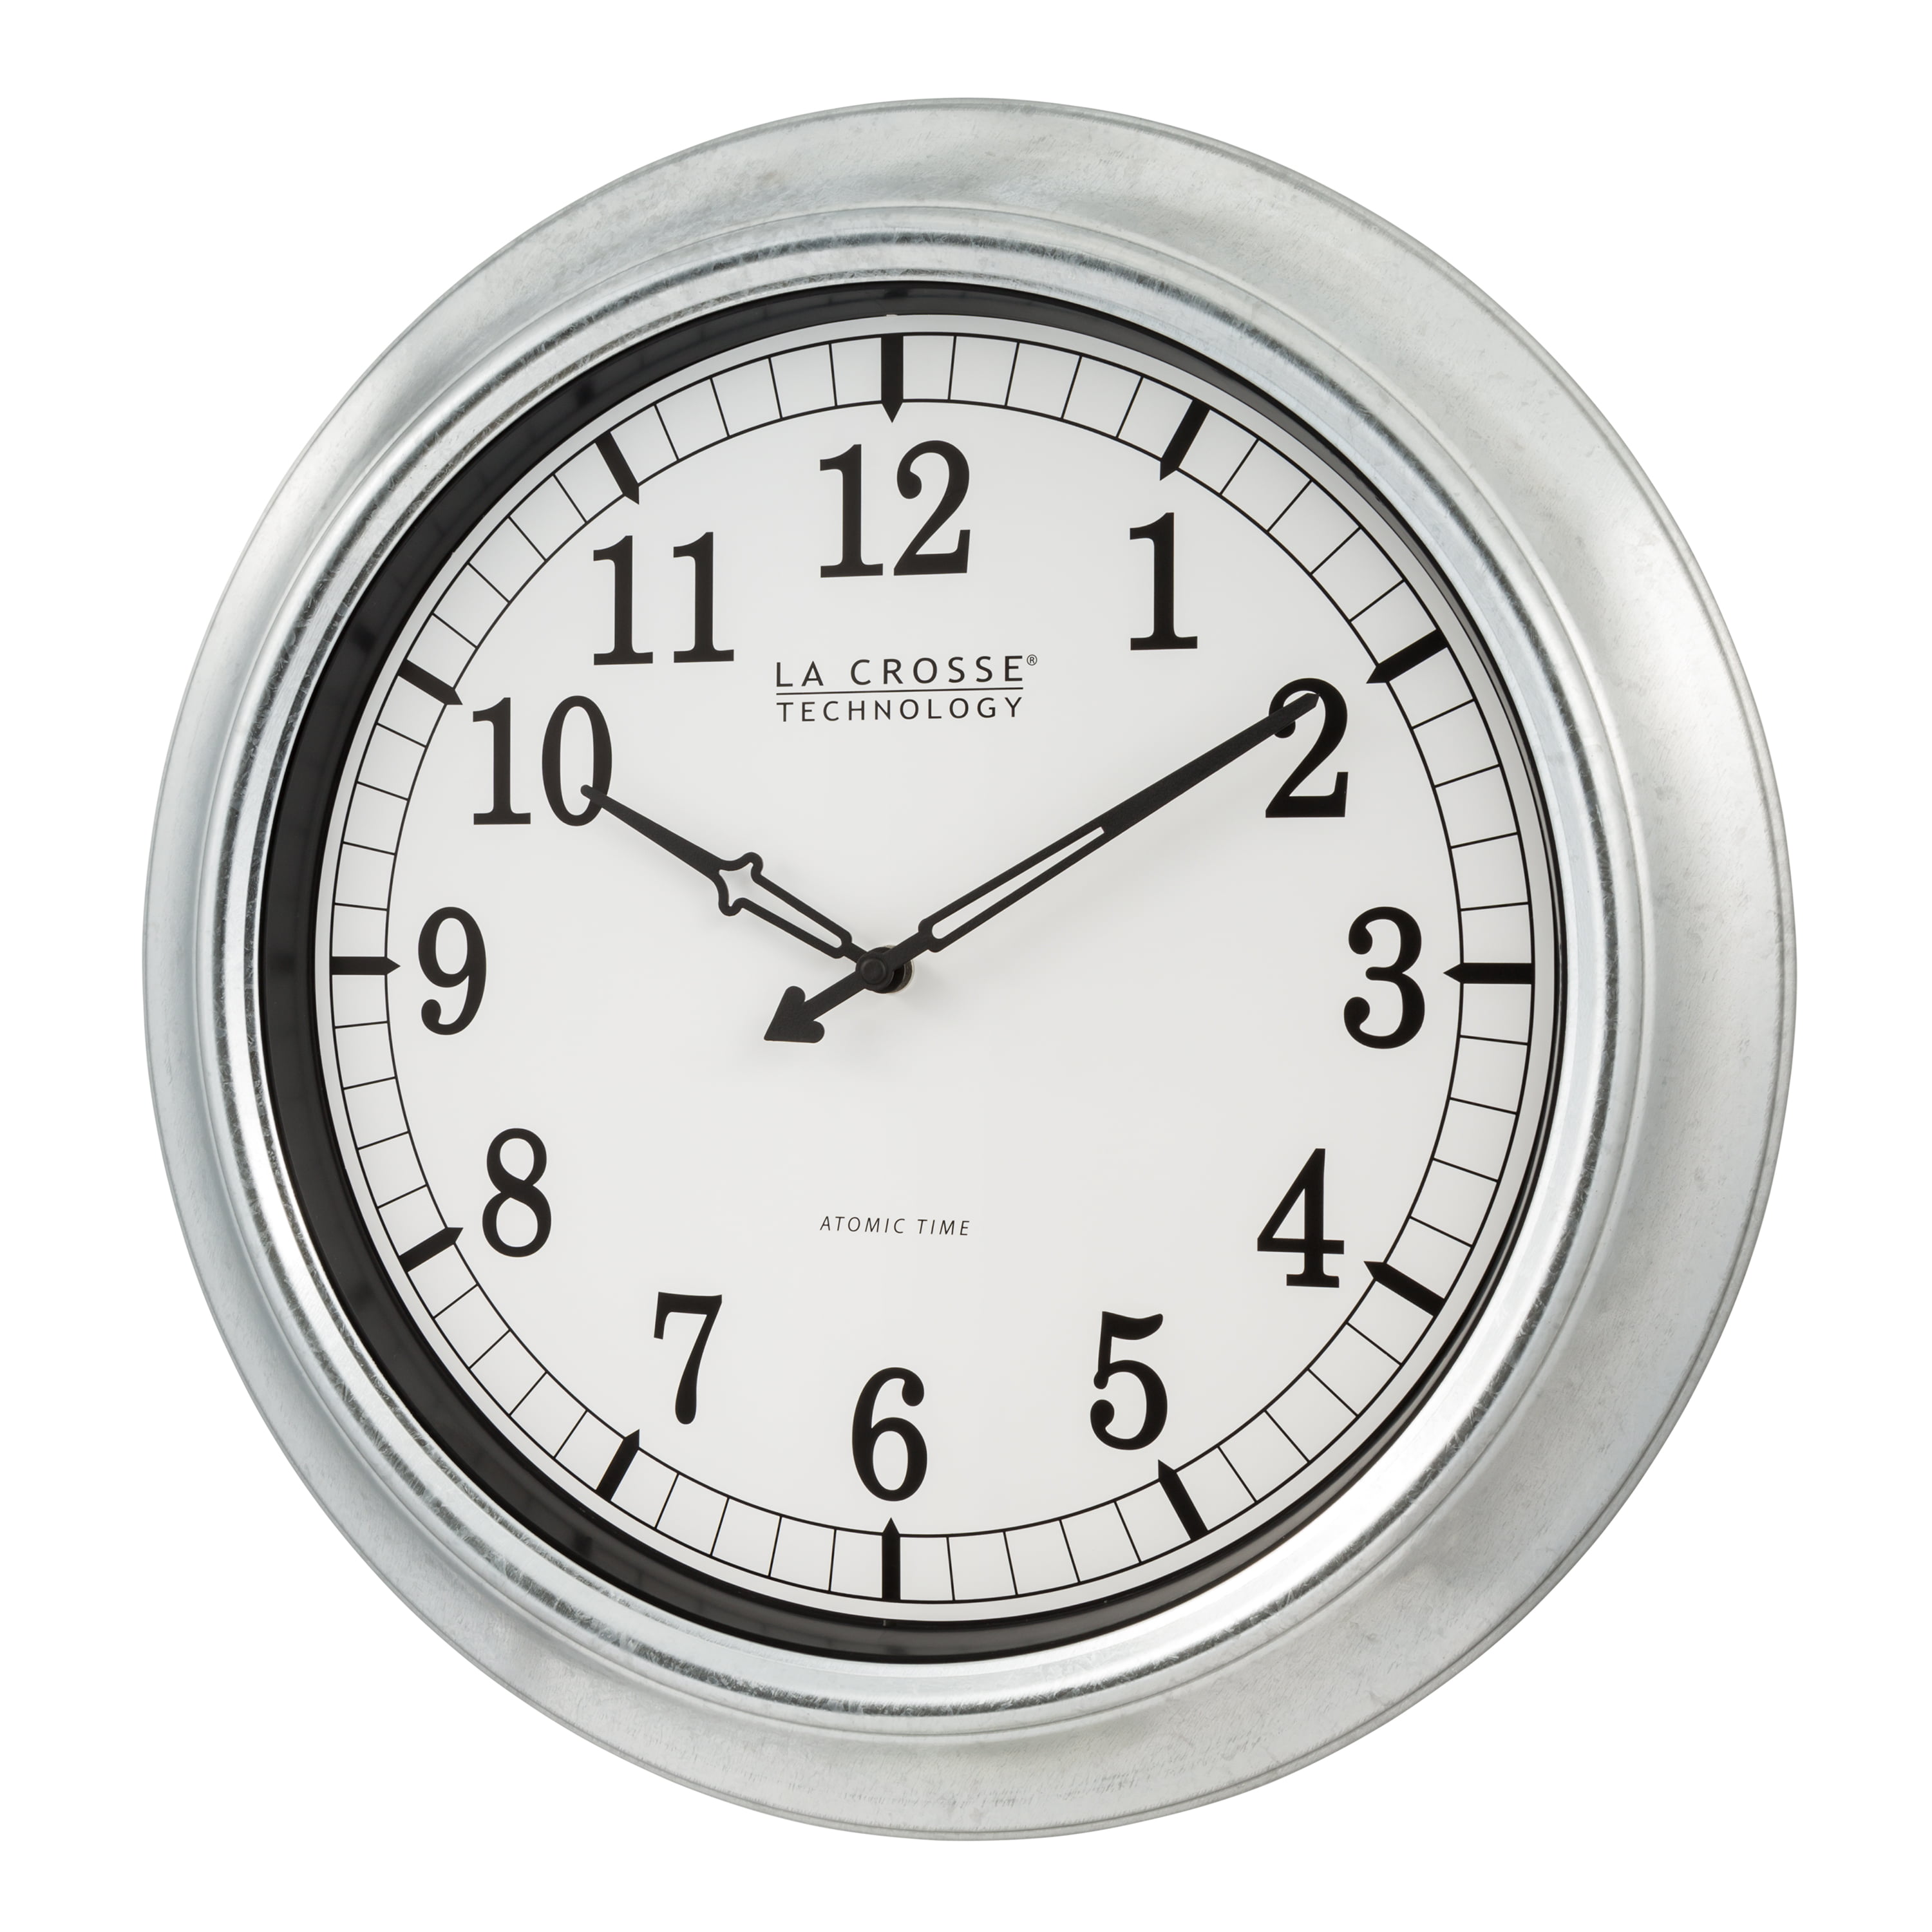 La Crosse 18 Inch Outdoor Weatherproof Analog Atomic Wall Clock Silver US Seller 